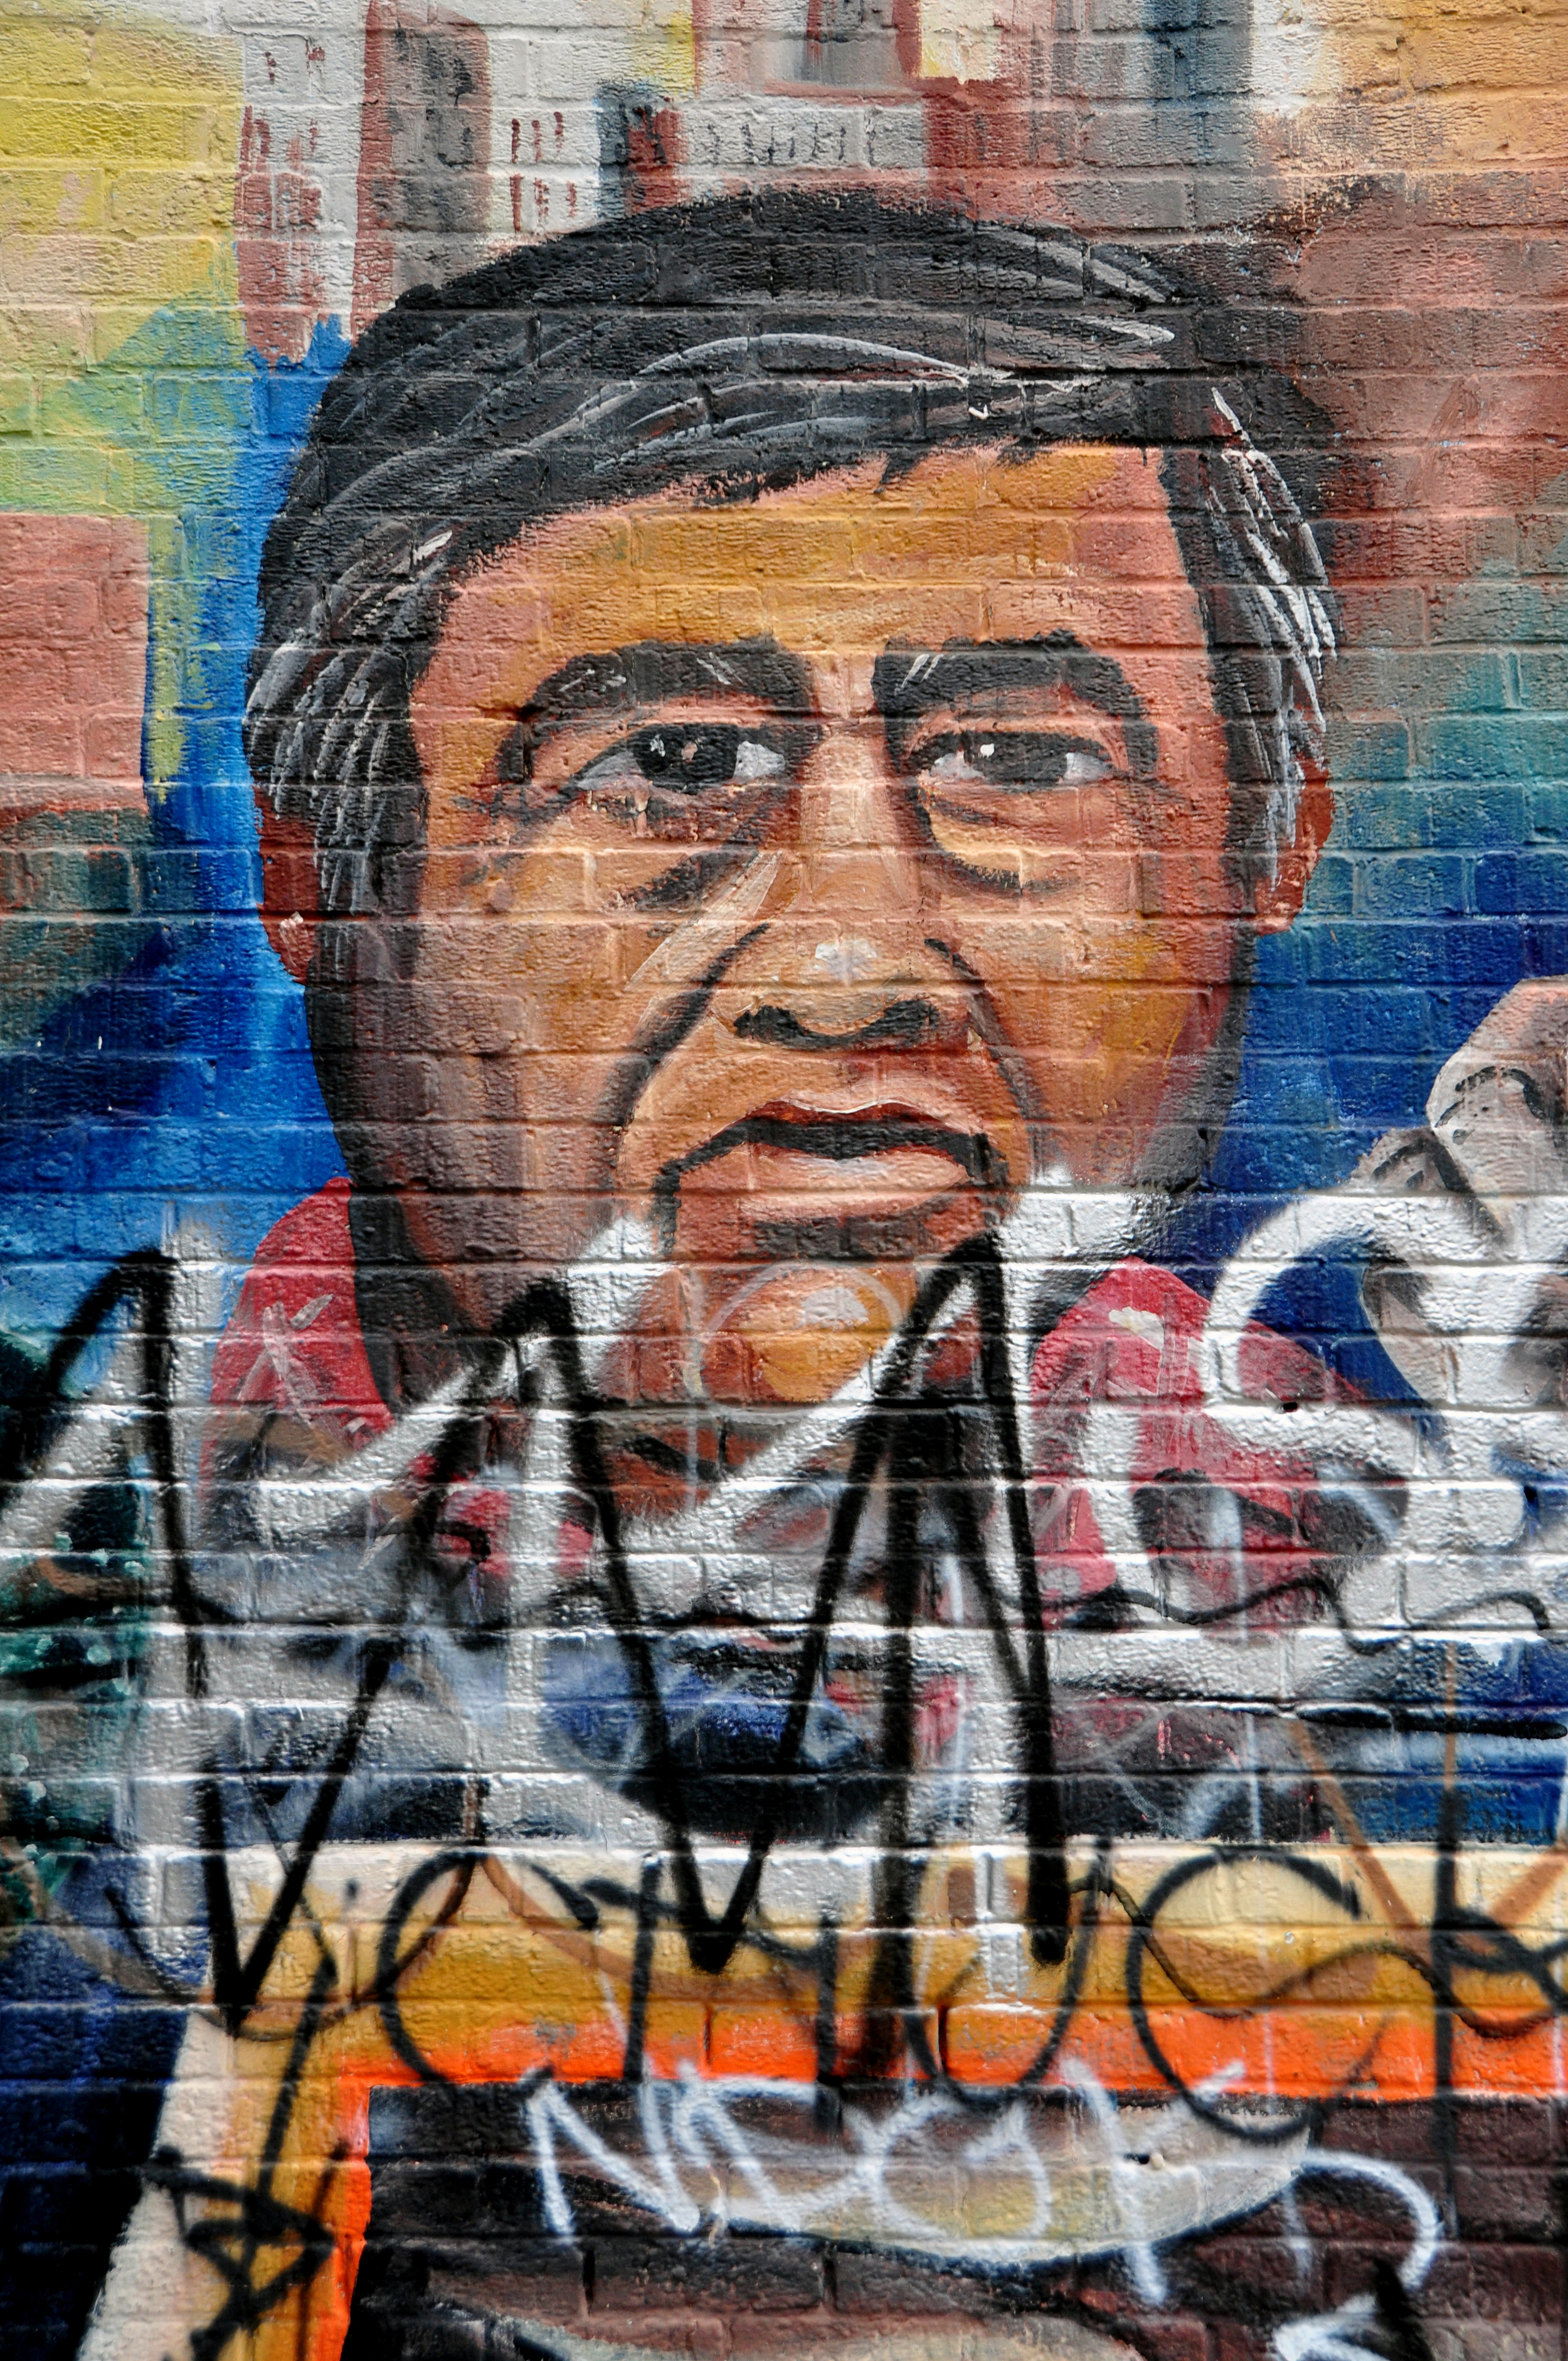  Cesar Chavez mural,&nbsp;Los Angeles 